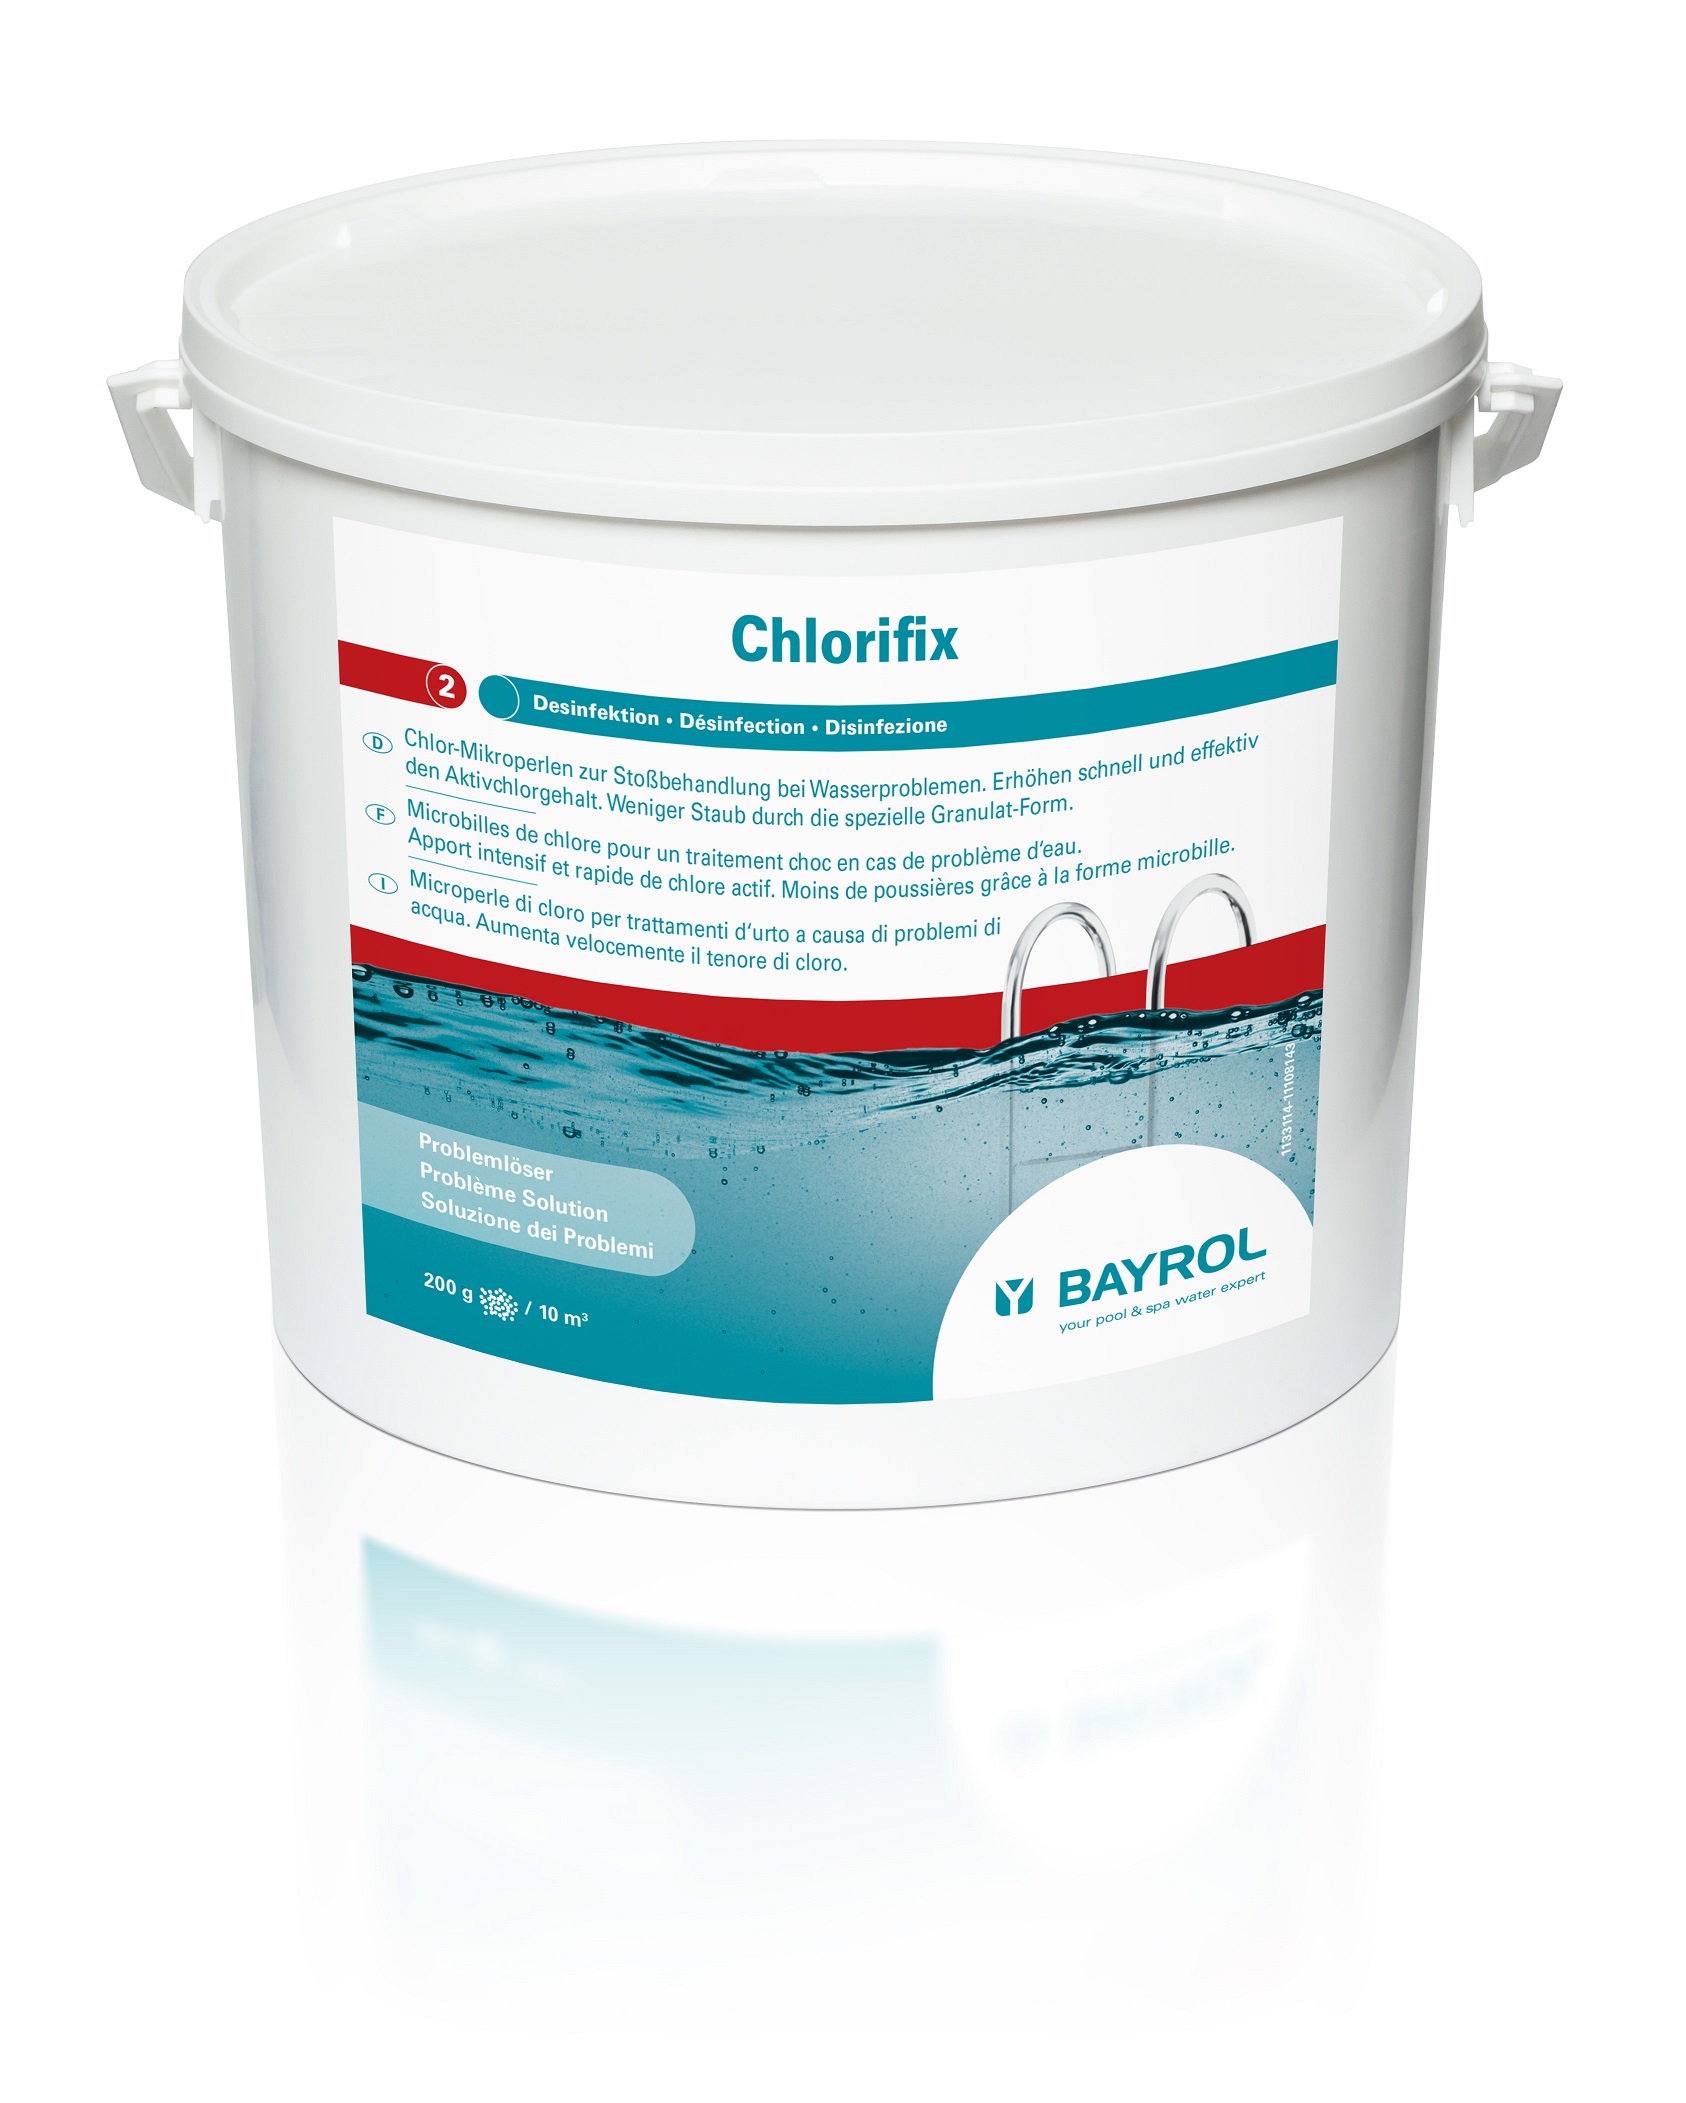 AS-021024 Chlorifix 10kg schnellösliches Chlorgranulat hochwertiges Chlorgranulat zur Stoßbehandlung